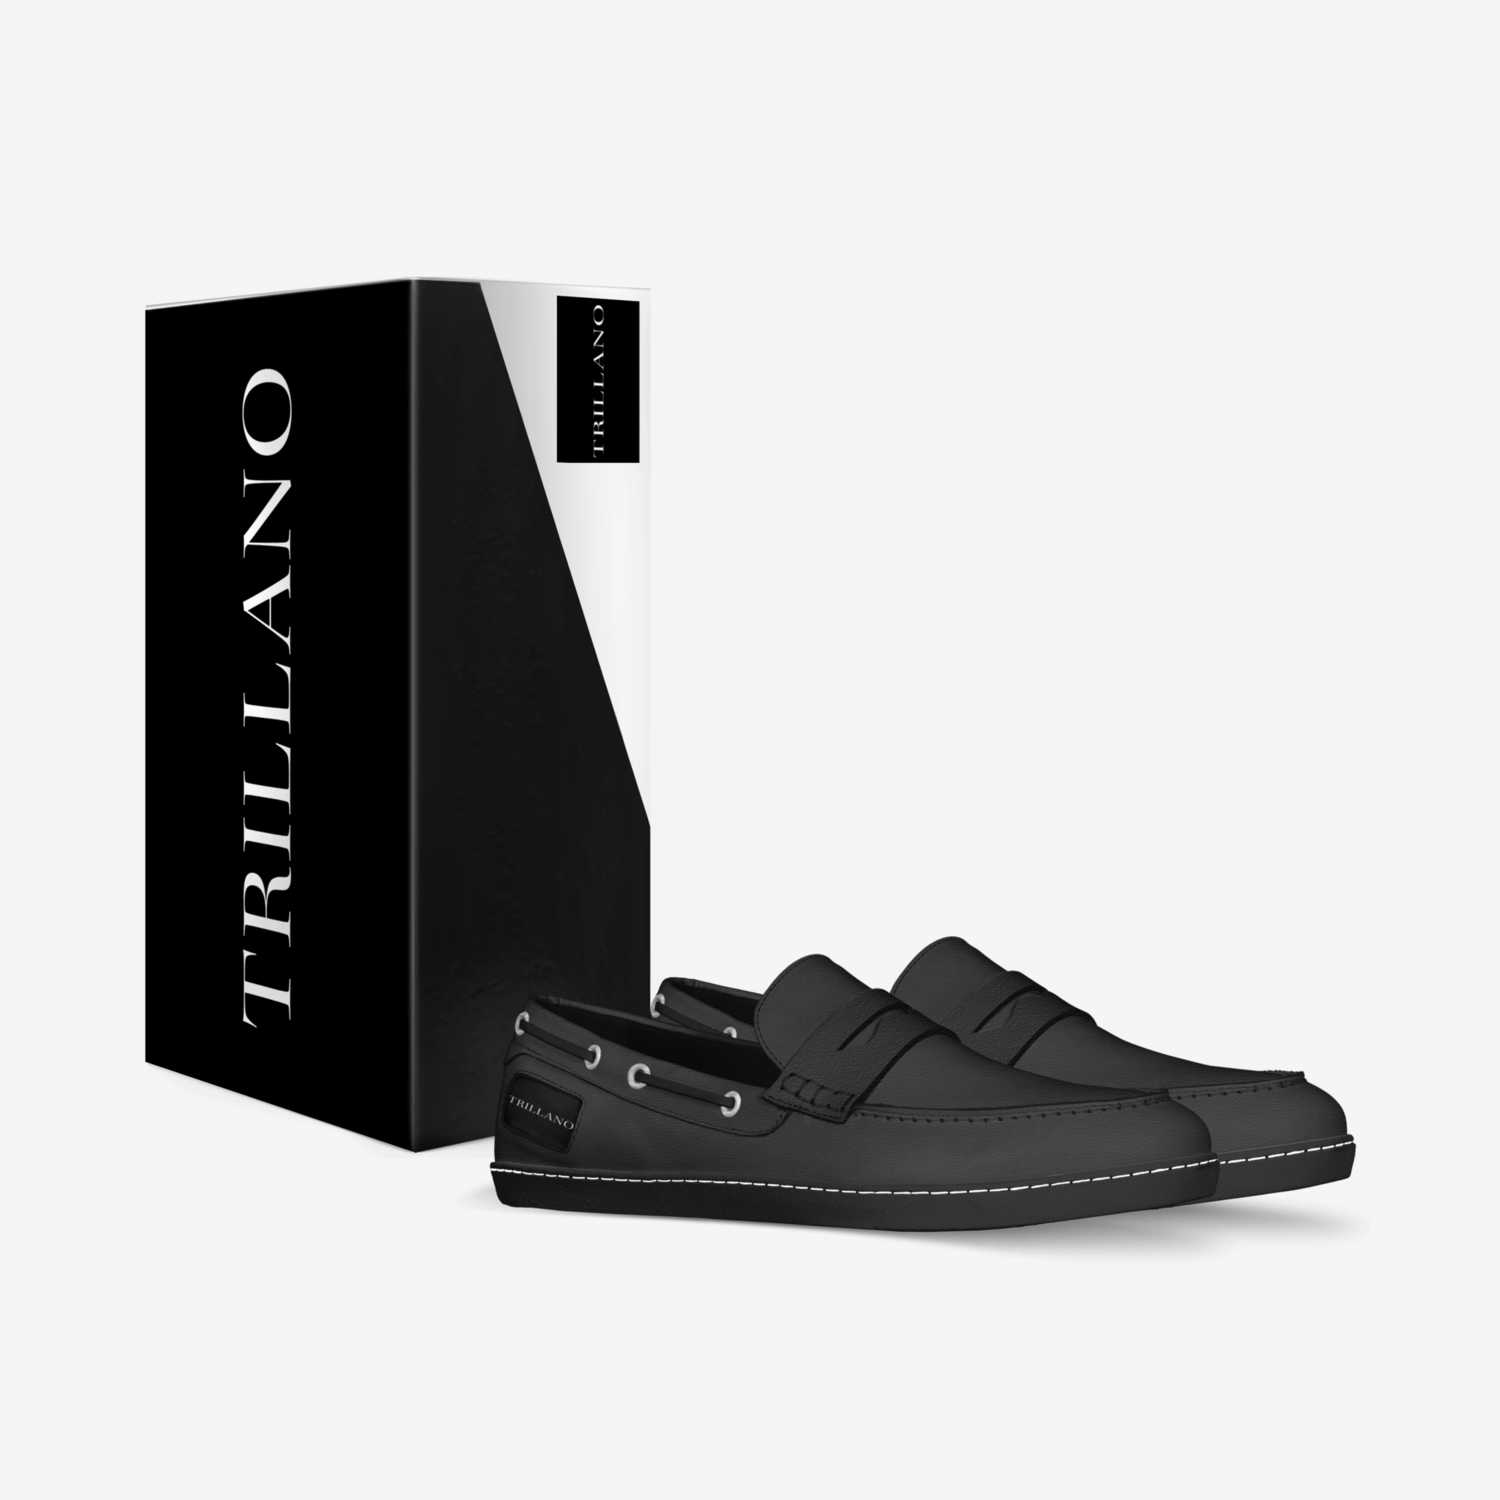 Trillano custom made in Italy shoes by Trillano Adisa | Box view